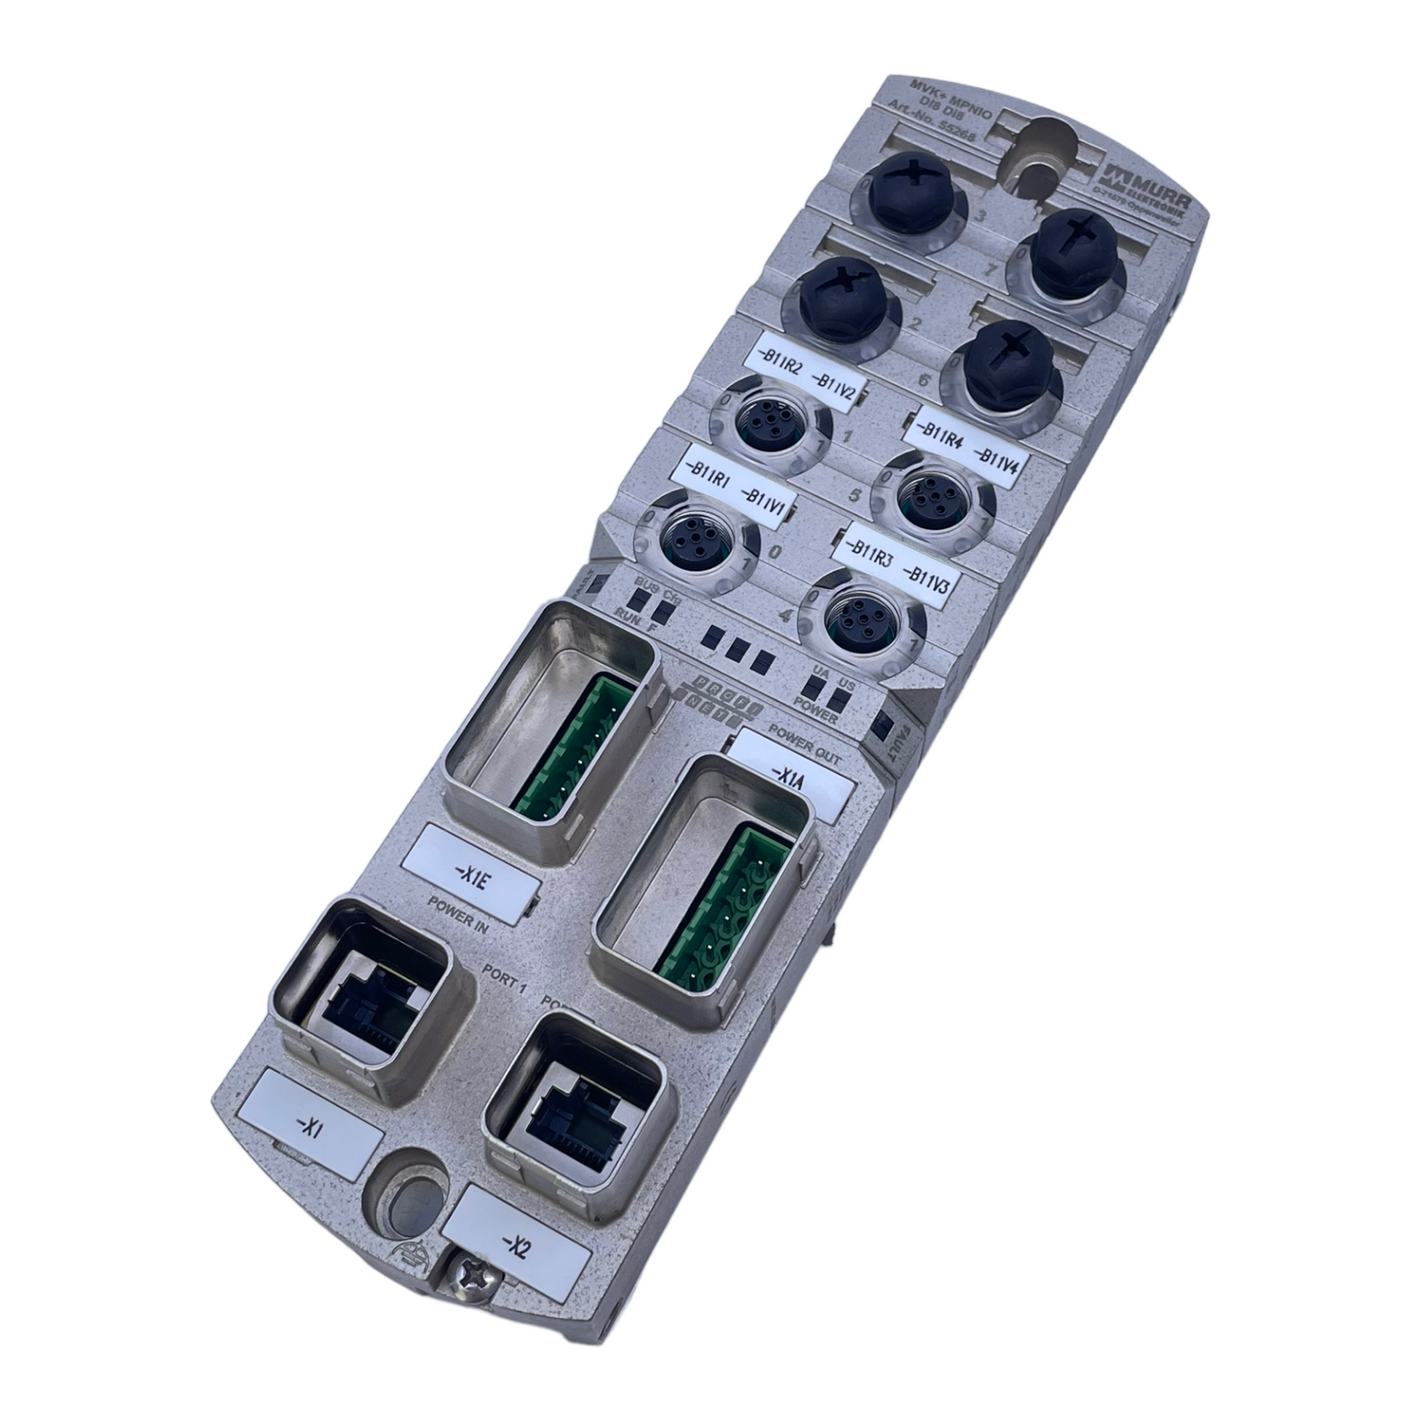 Murr Elektronik MVK+MPNIO DI8 DI8 55268 Compact module for industrial use 